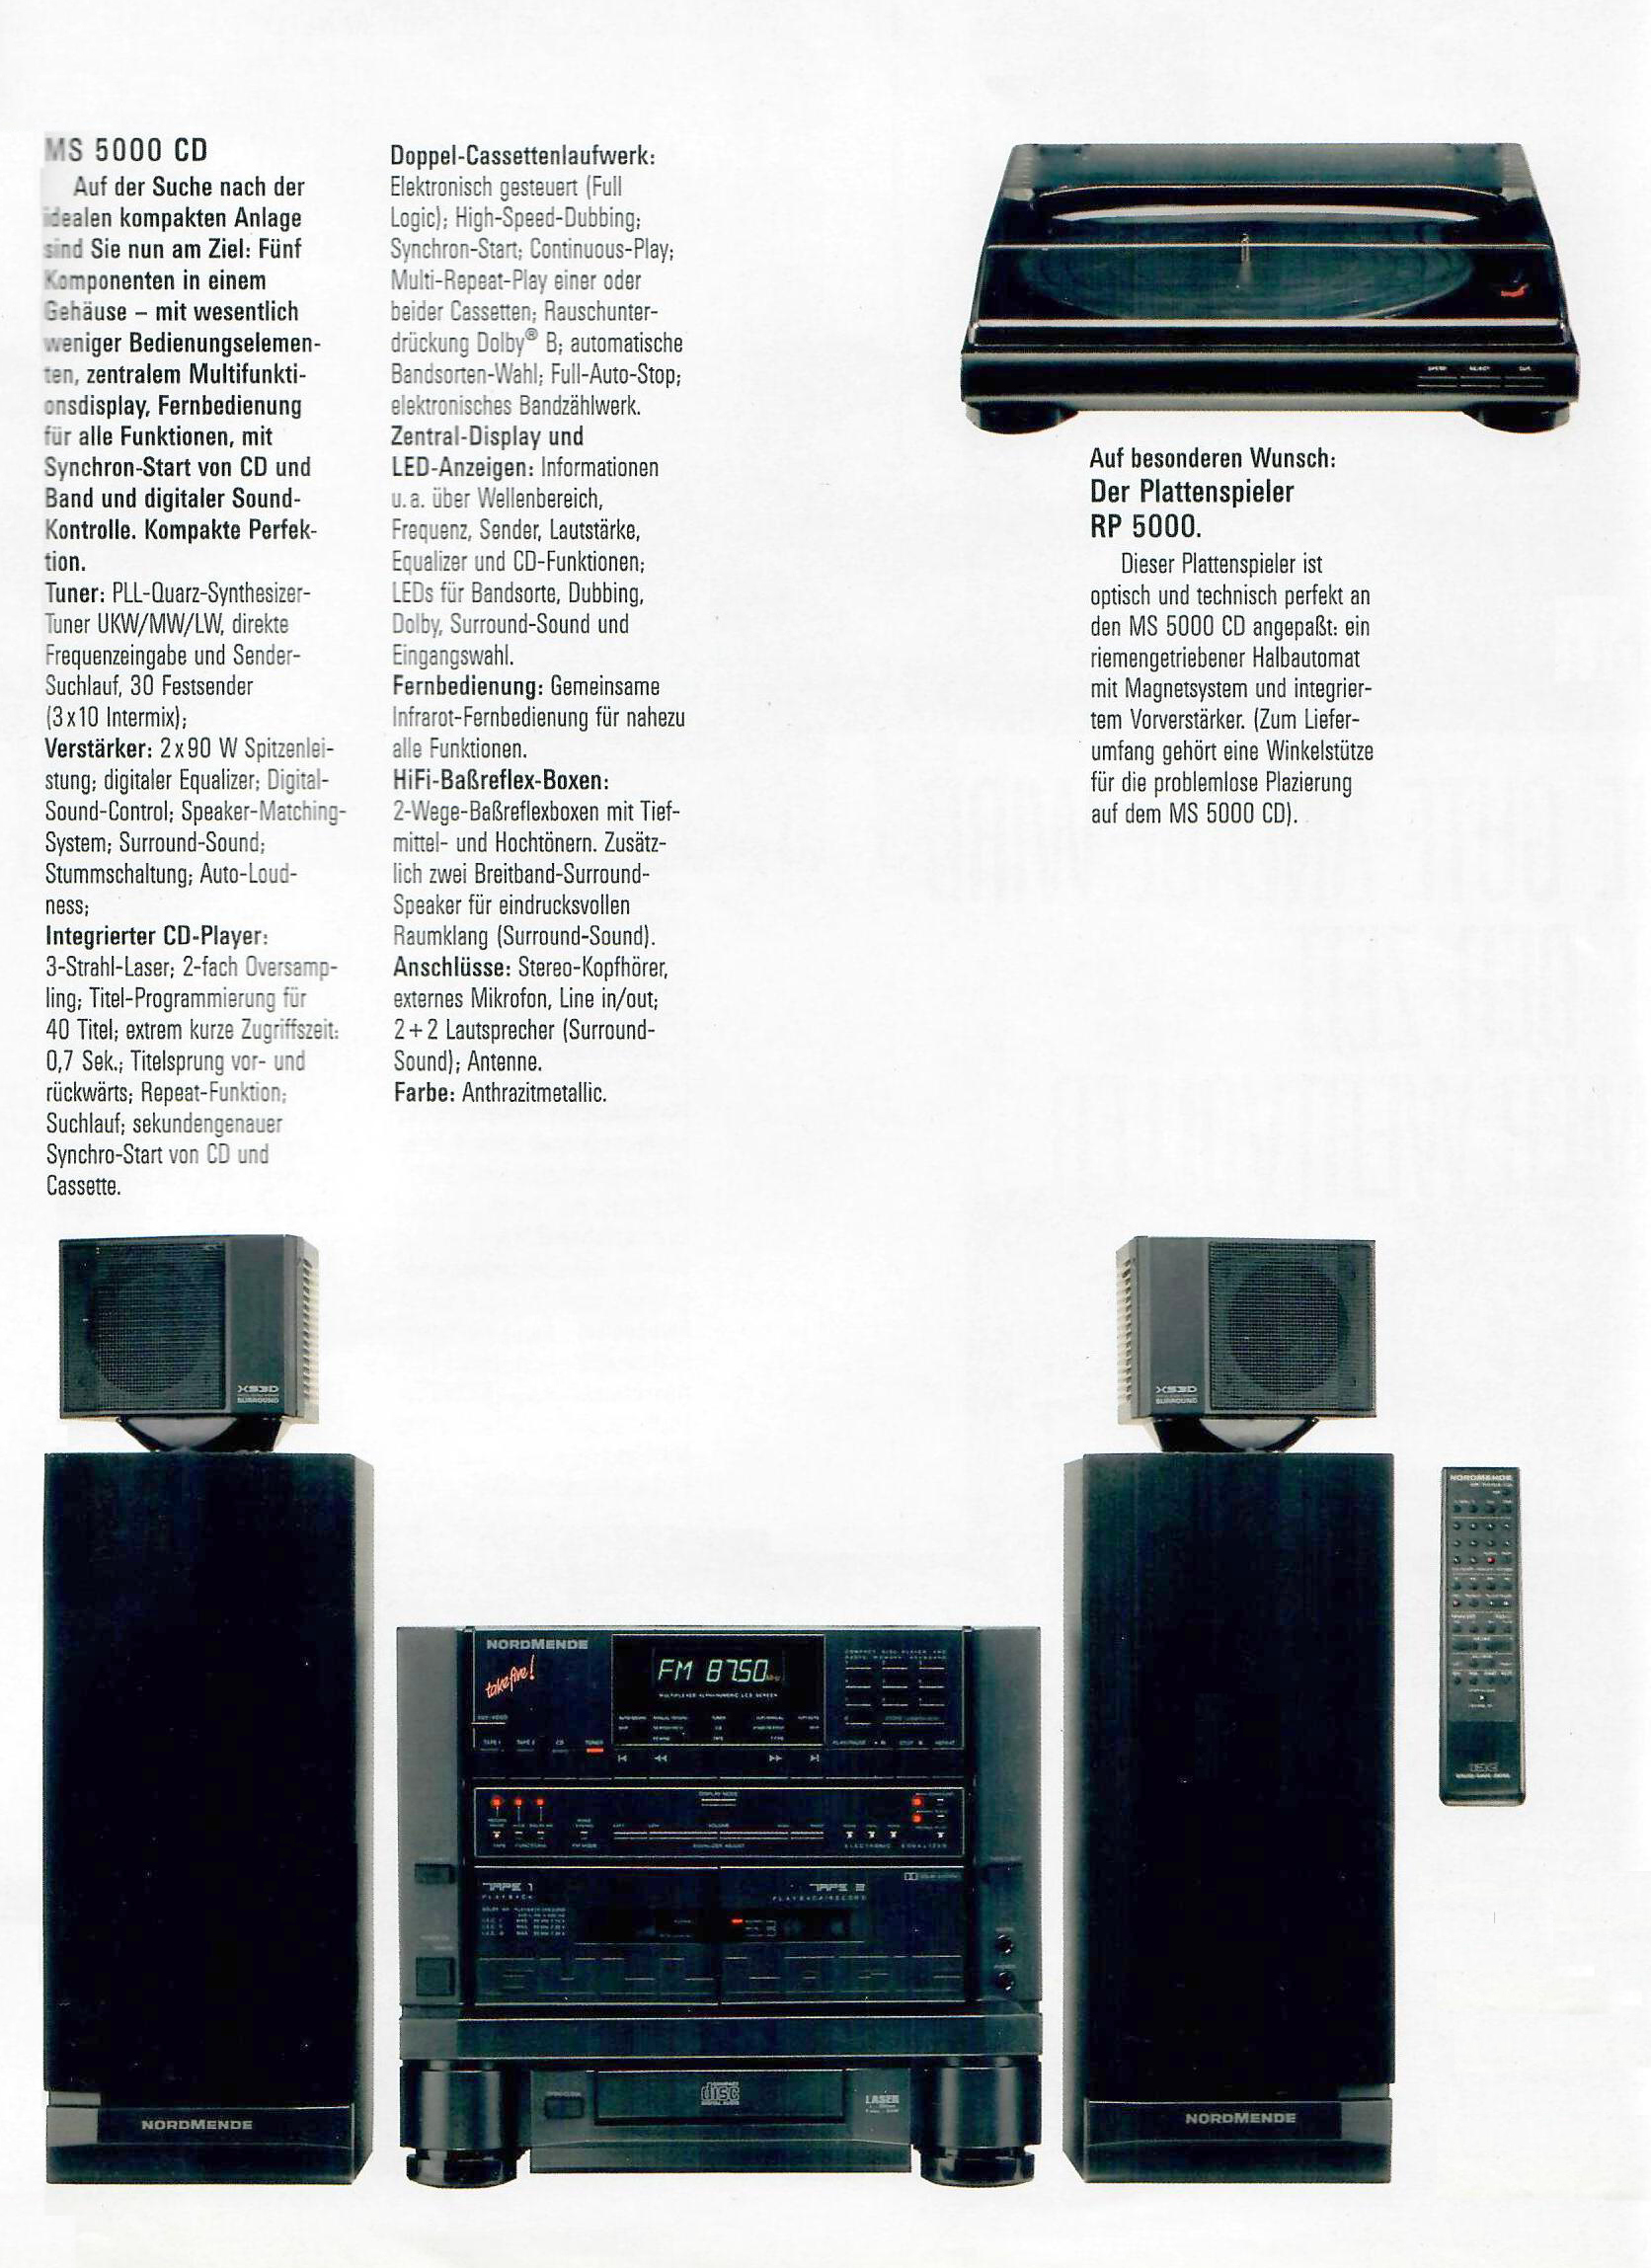 Nordmende MS-5000 CD-Prospekt-1991.jpg